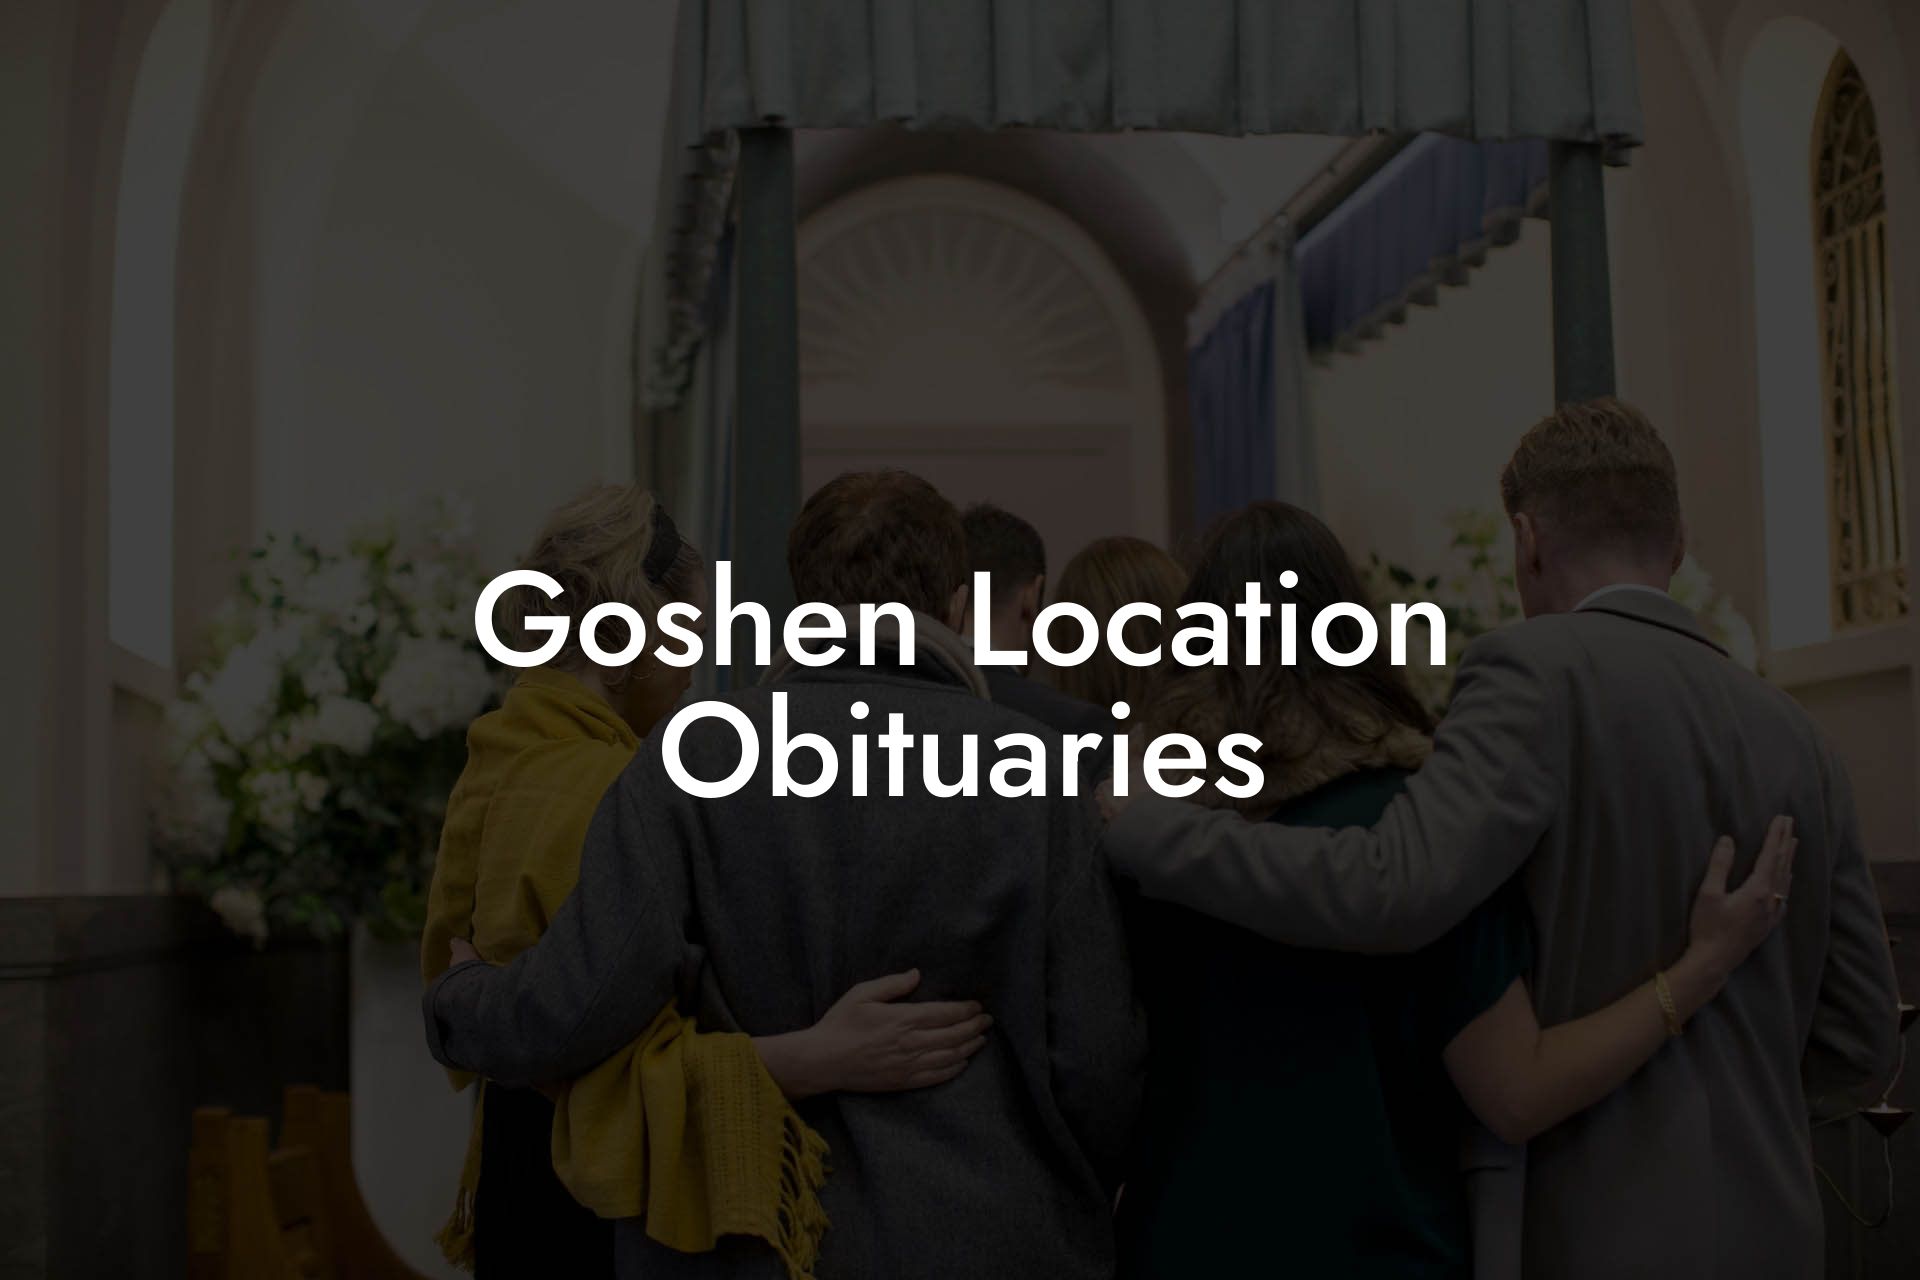 Goshen Location Obituaries